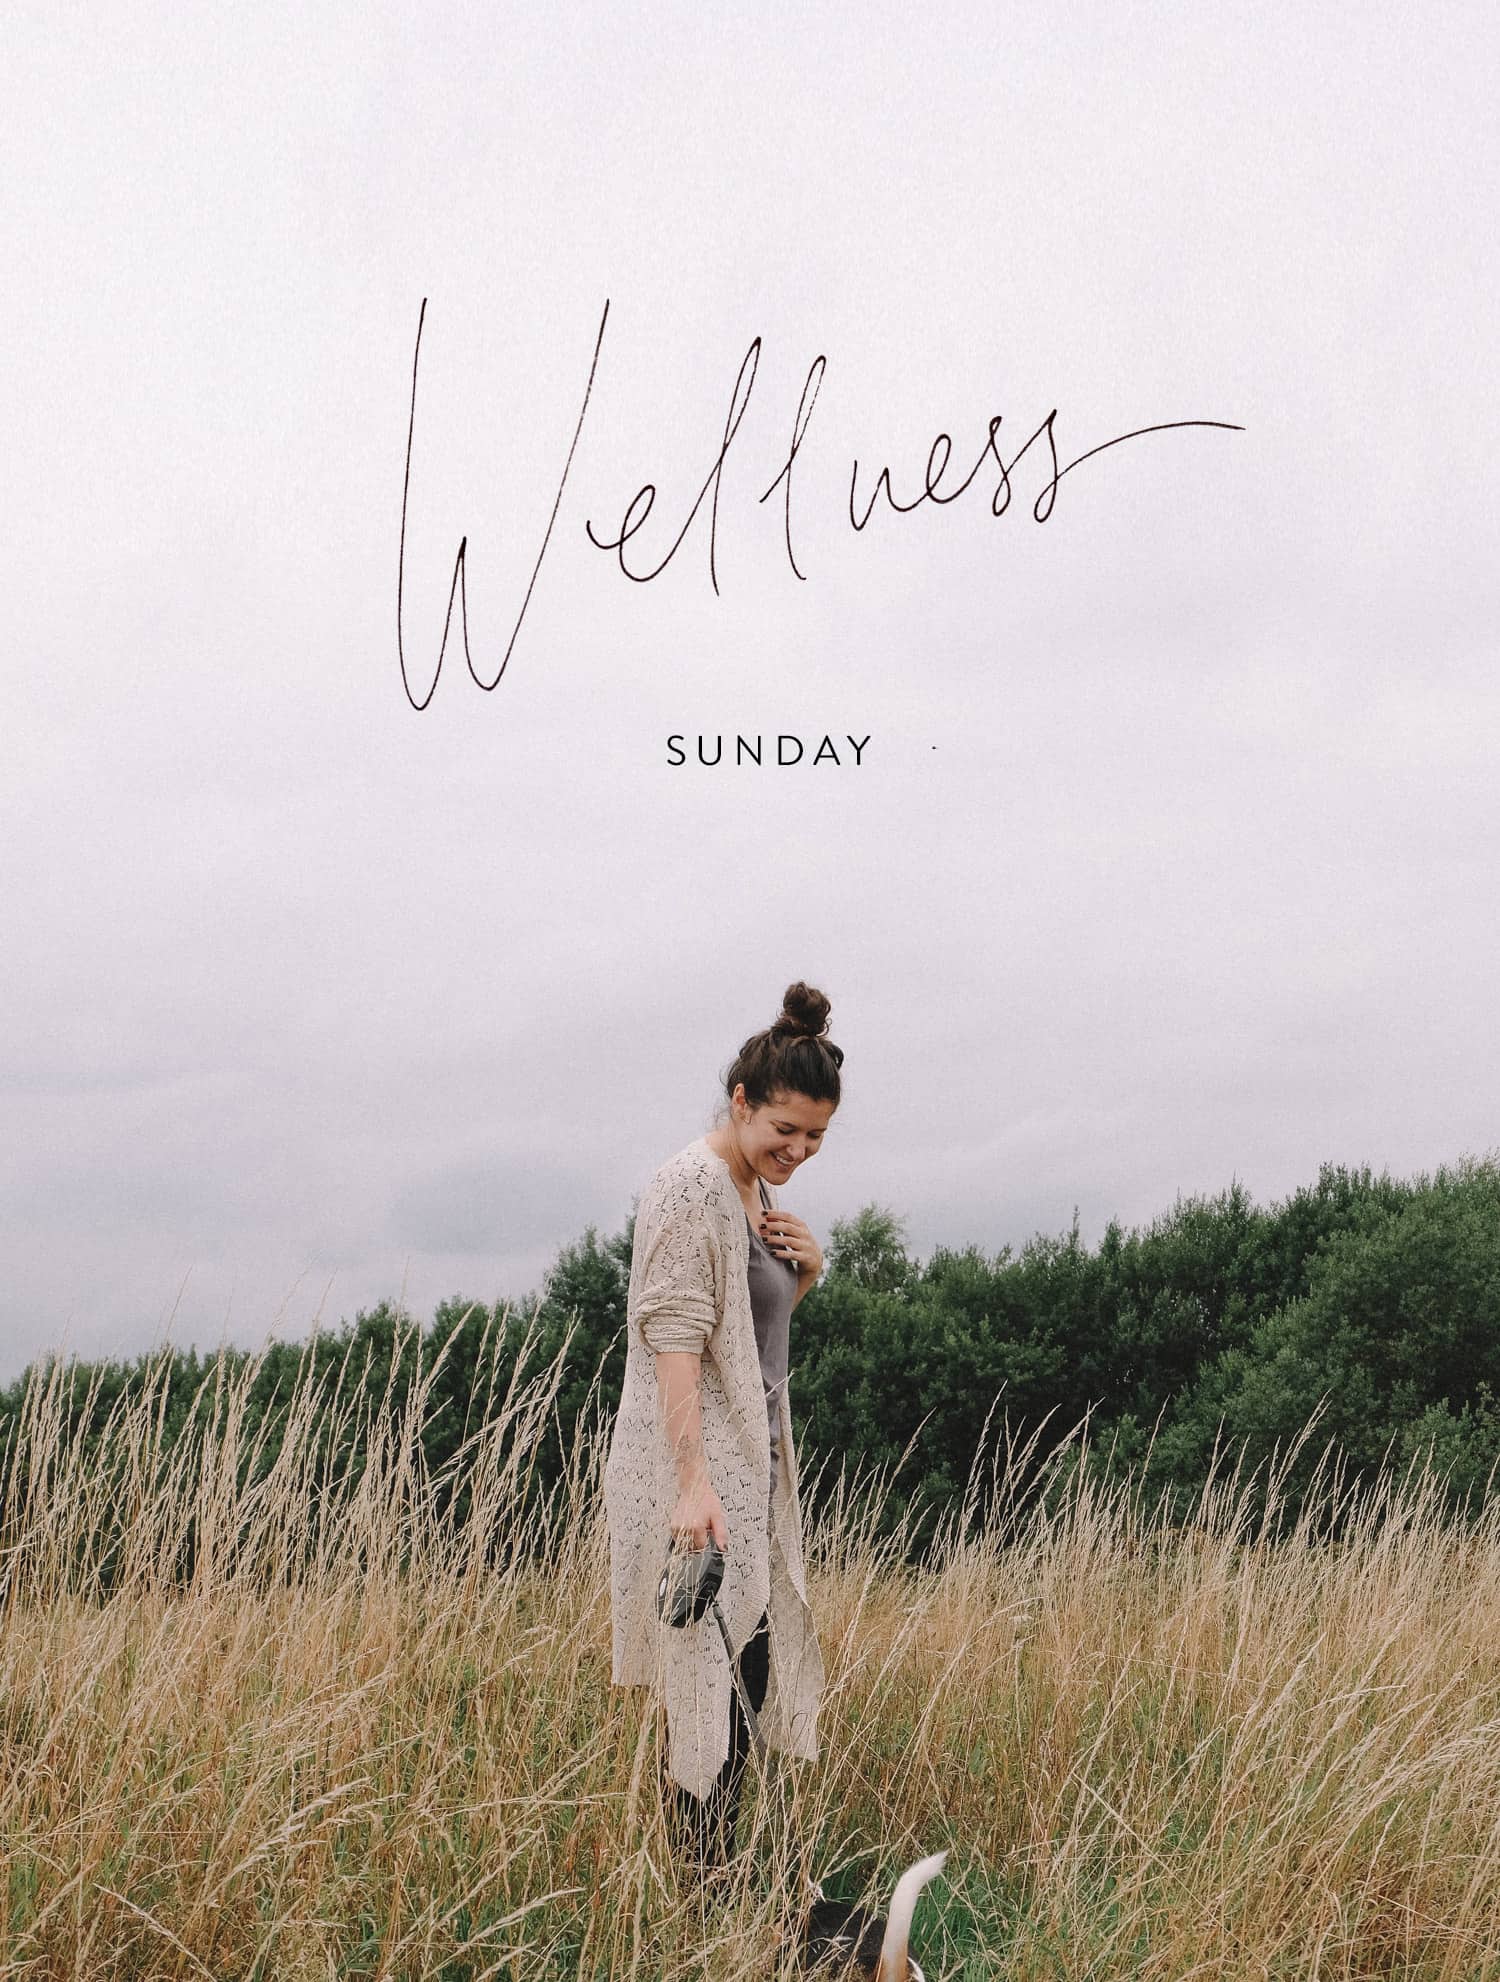 Kinlake-Wellness-Sunday-01